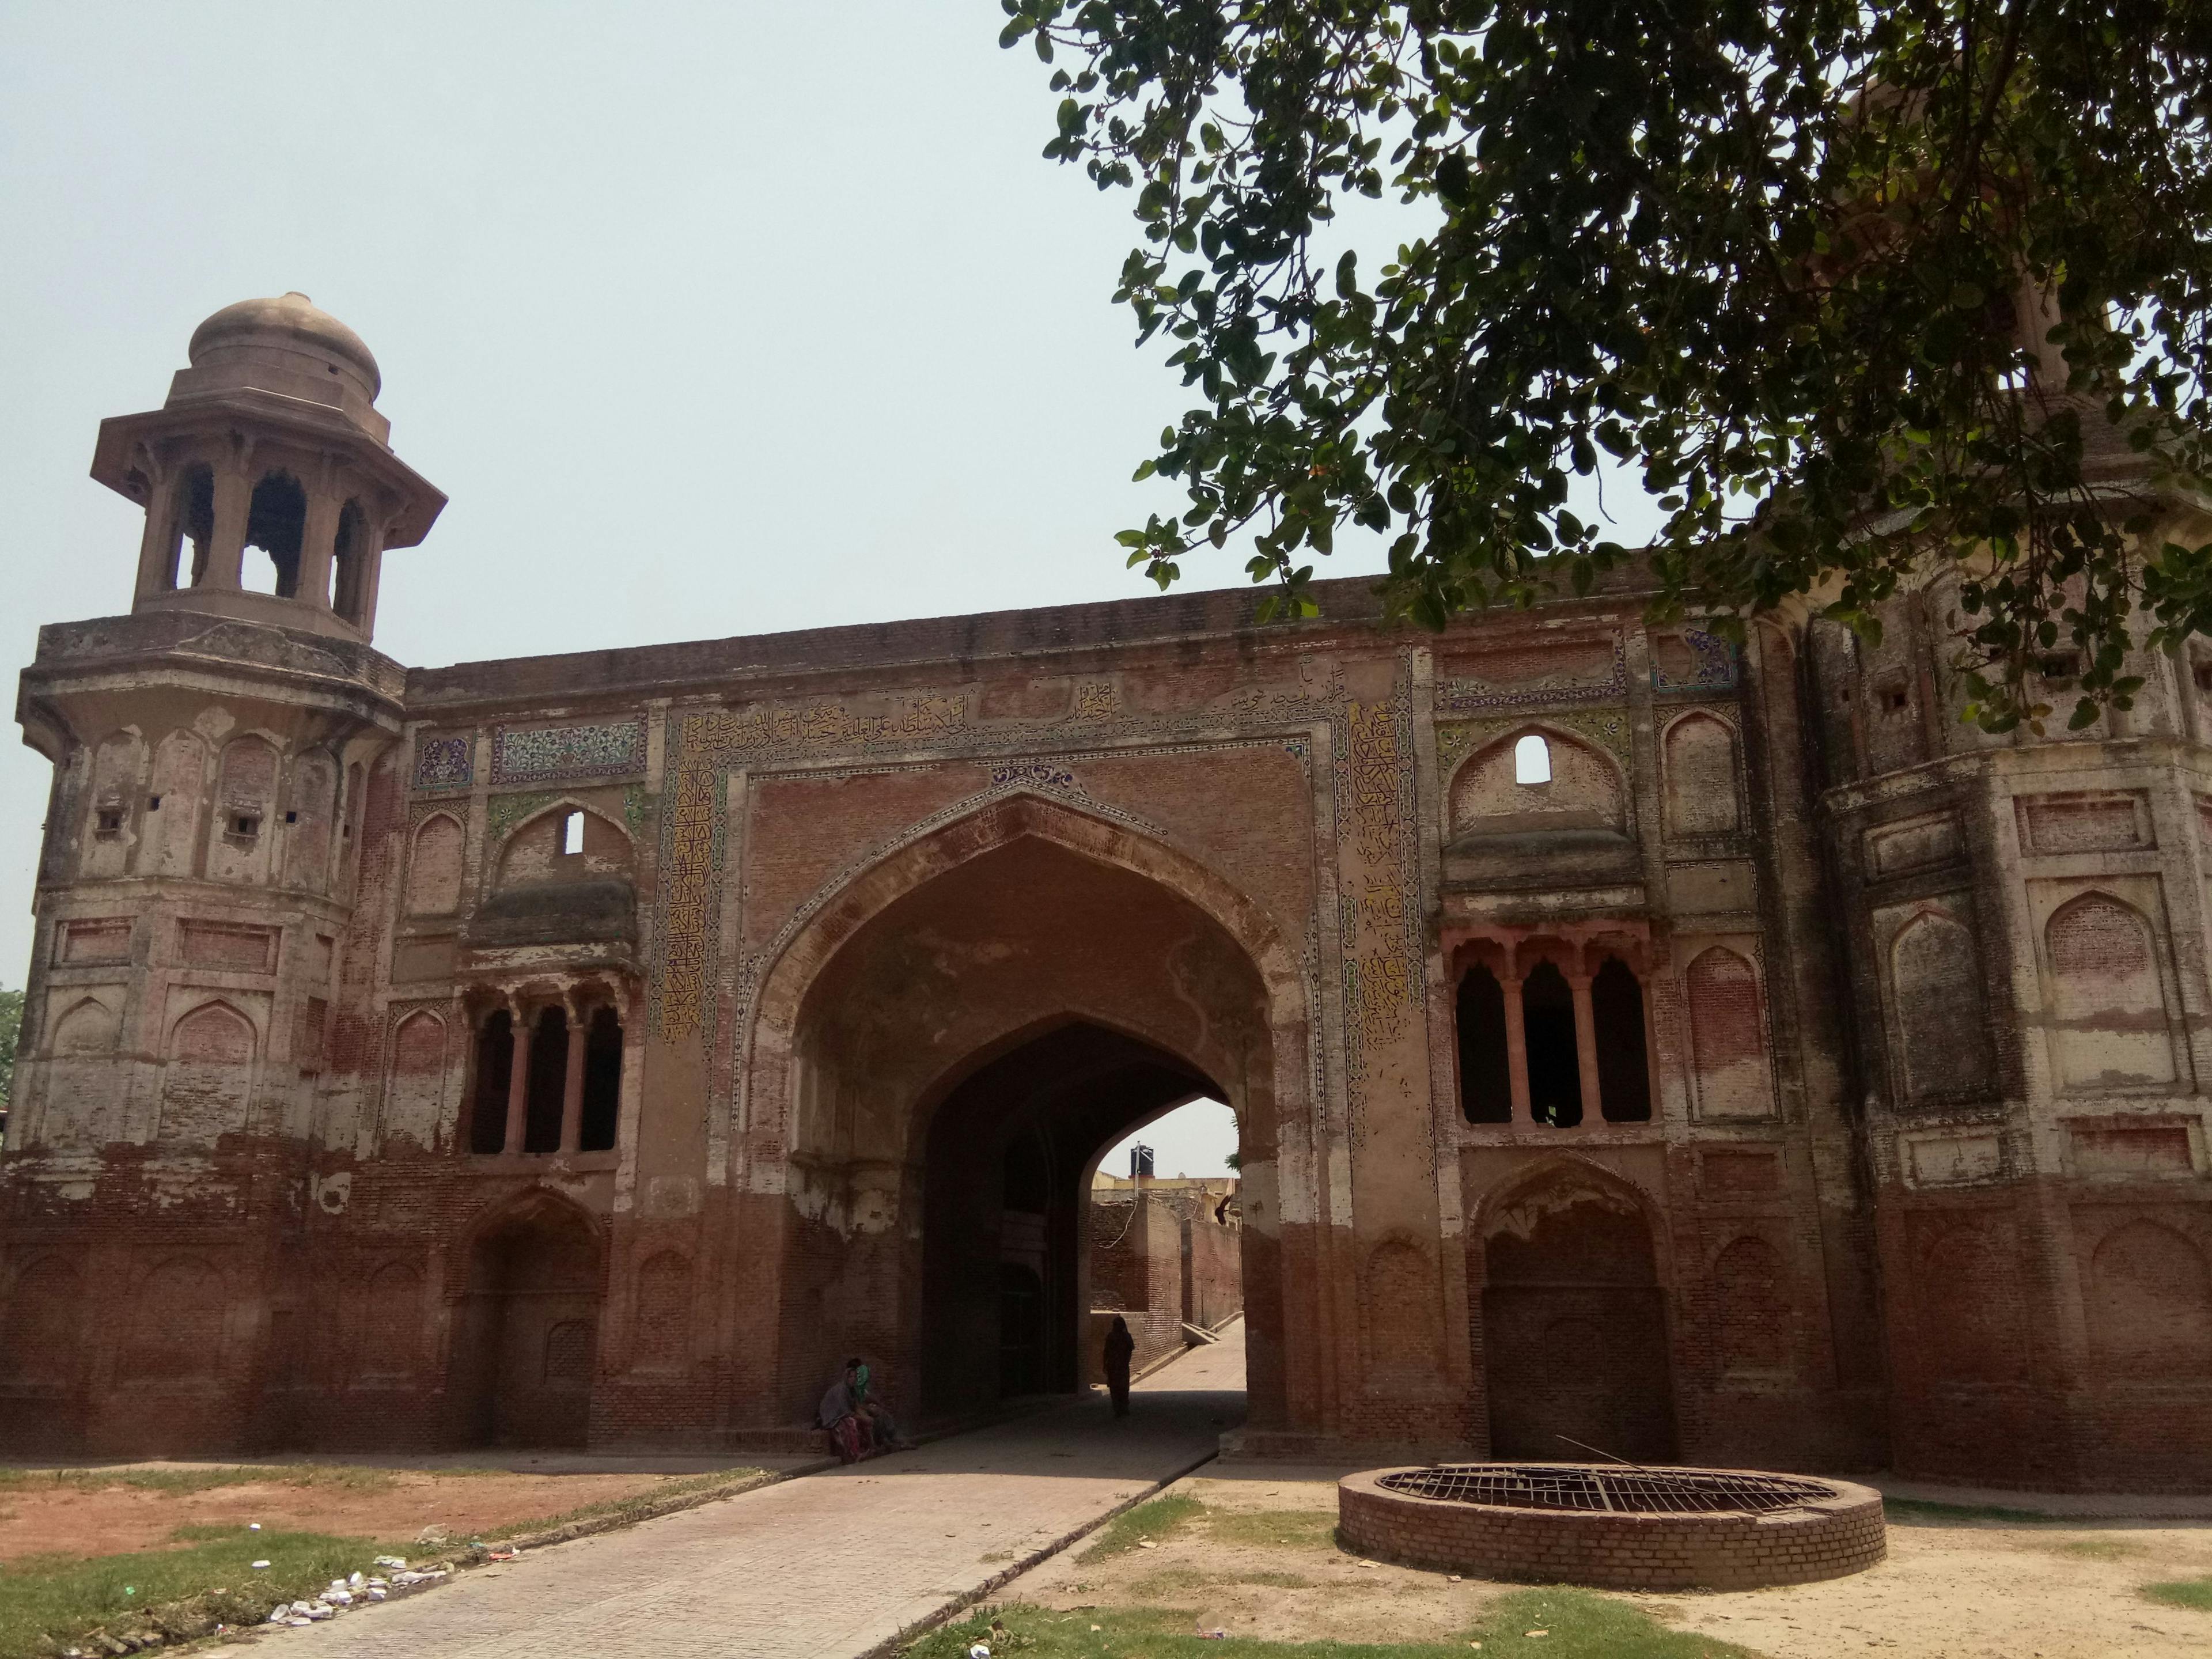 The Lahori Gate